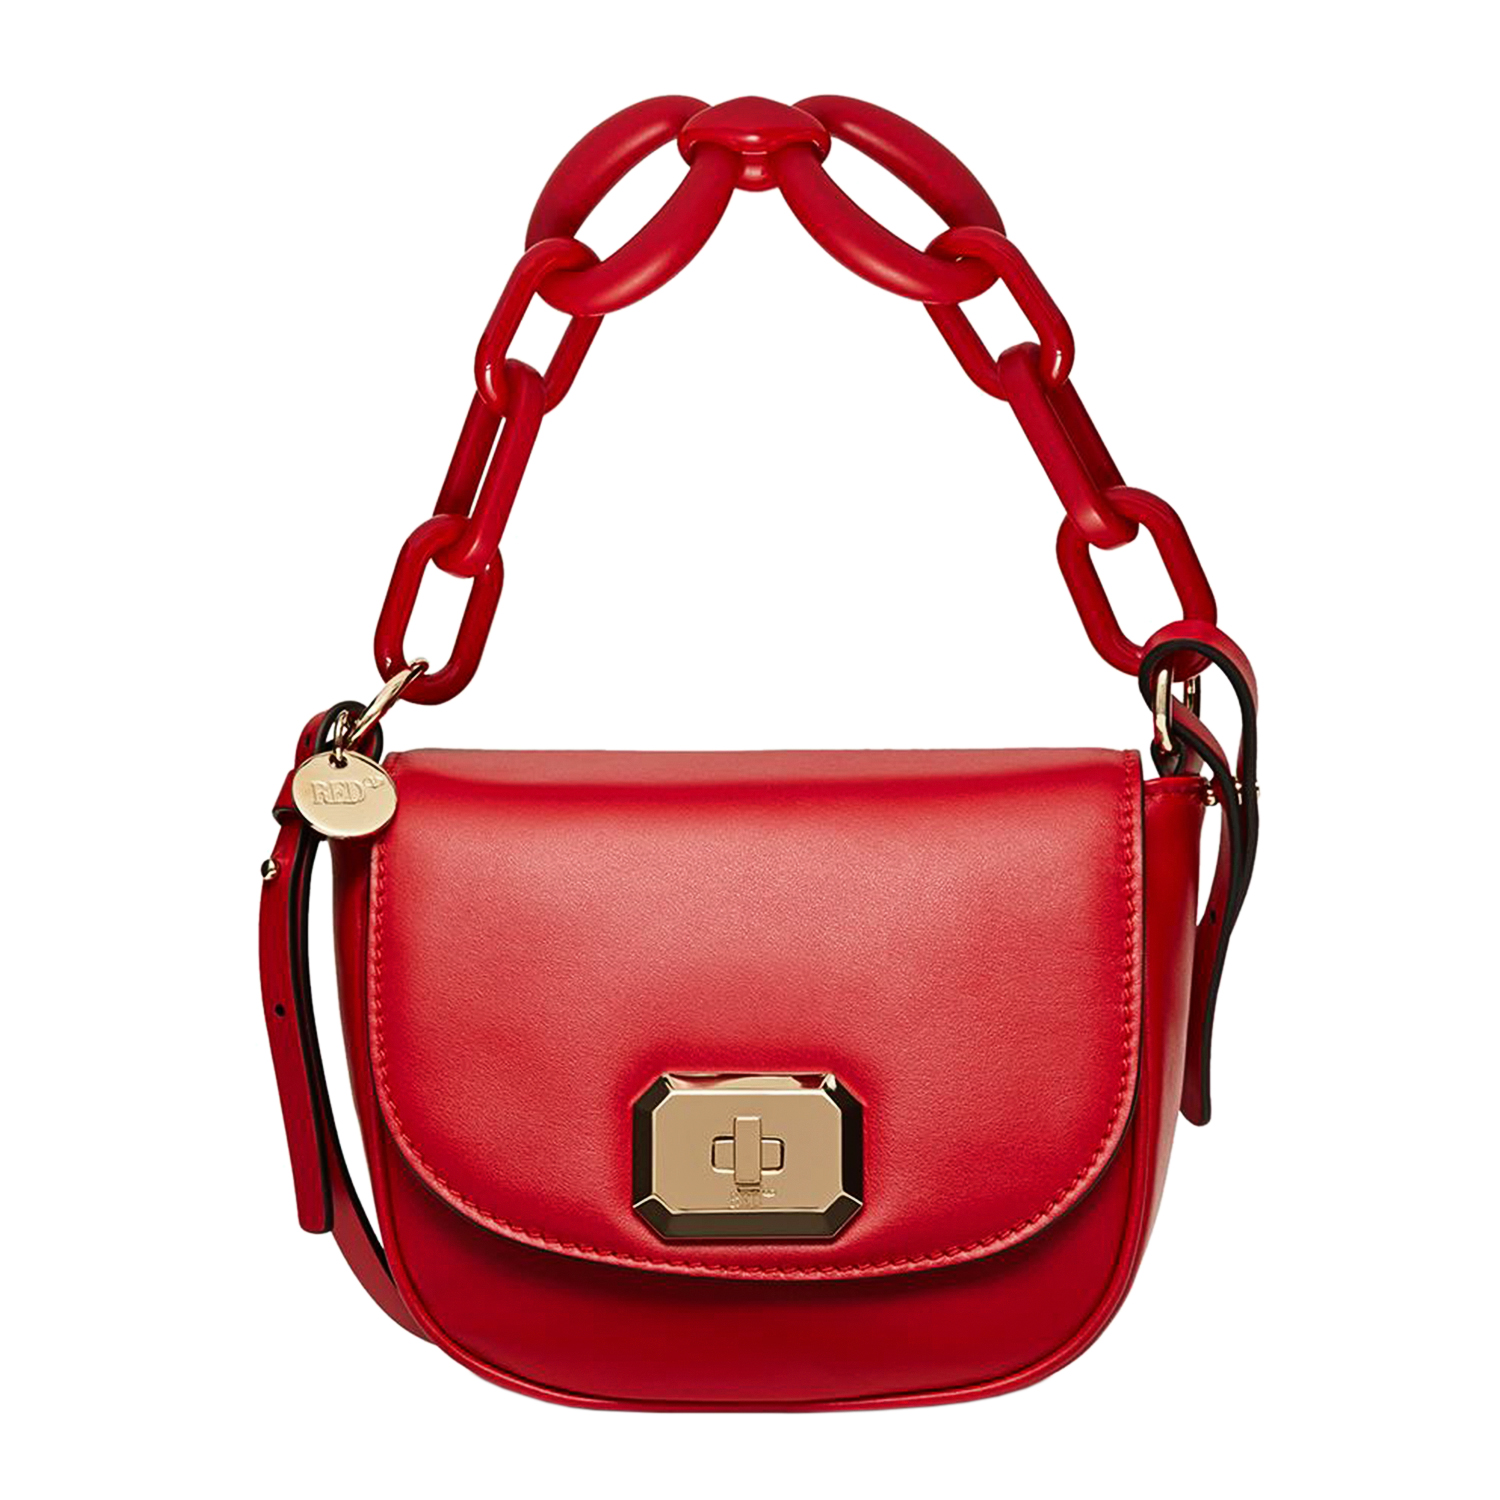 Красная кожаная сумка через плечо, 7х18х15 см Red Valentino, размер unica, цвет красный